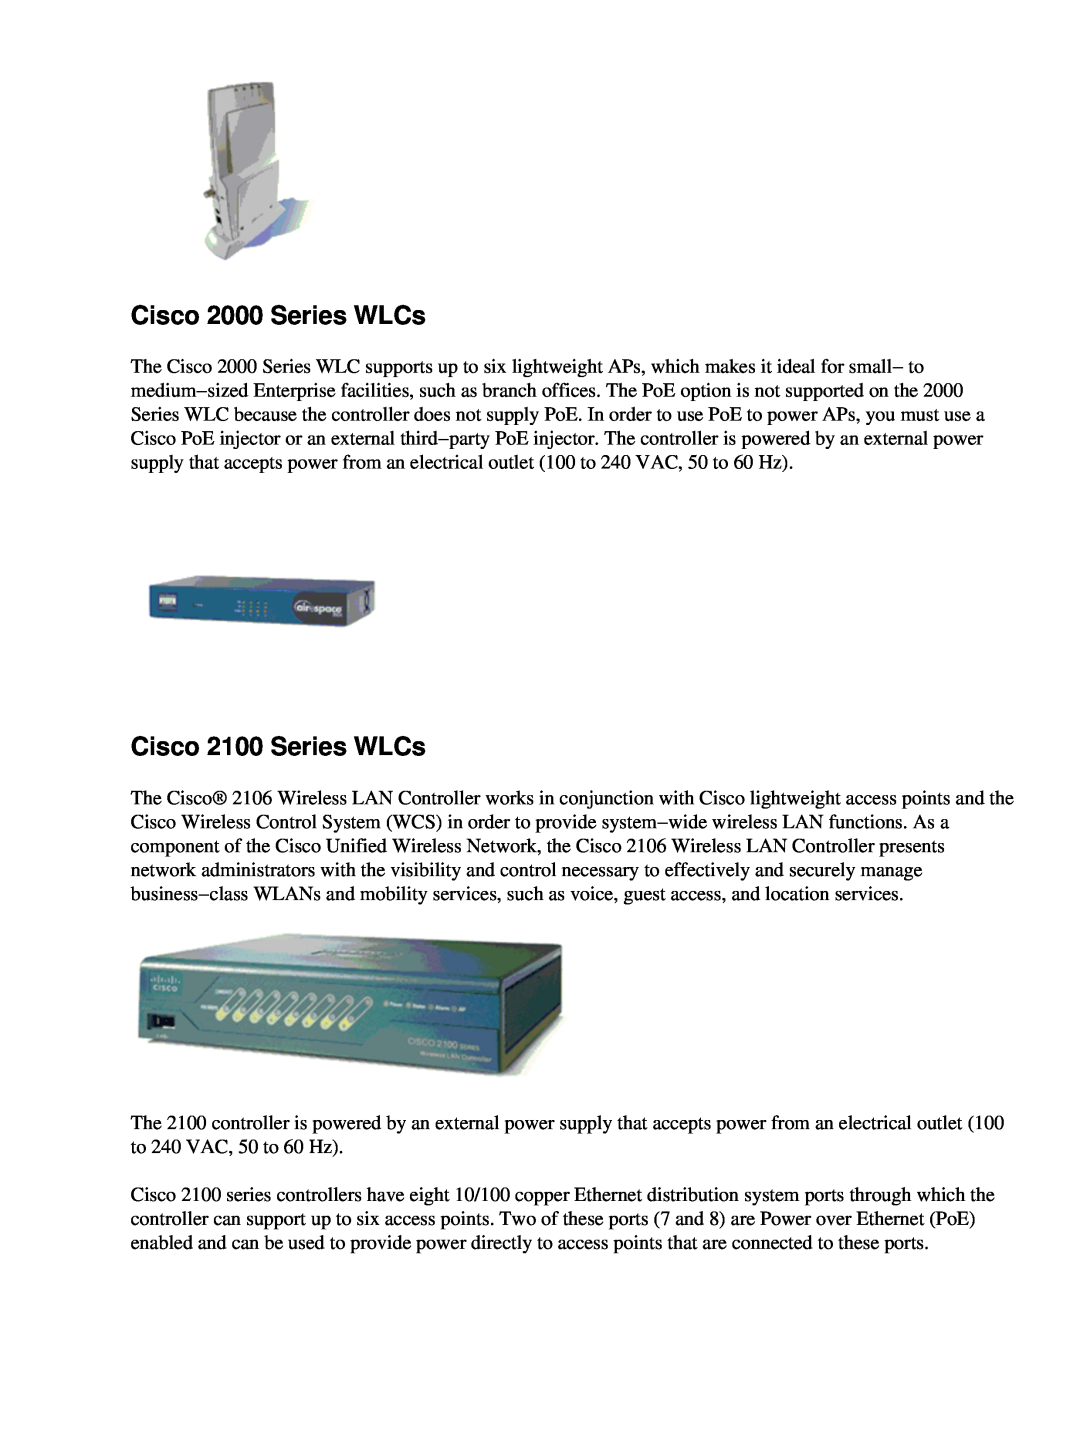 Cisco Systems 2008M-8i, UCSCRAIDMZ220 manual Cisco 2000 Series WLCs, Cisco 2100 Series WLCs 